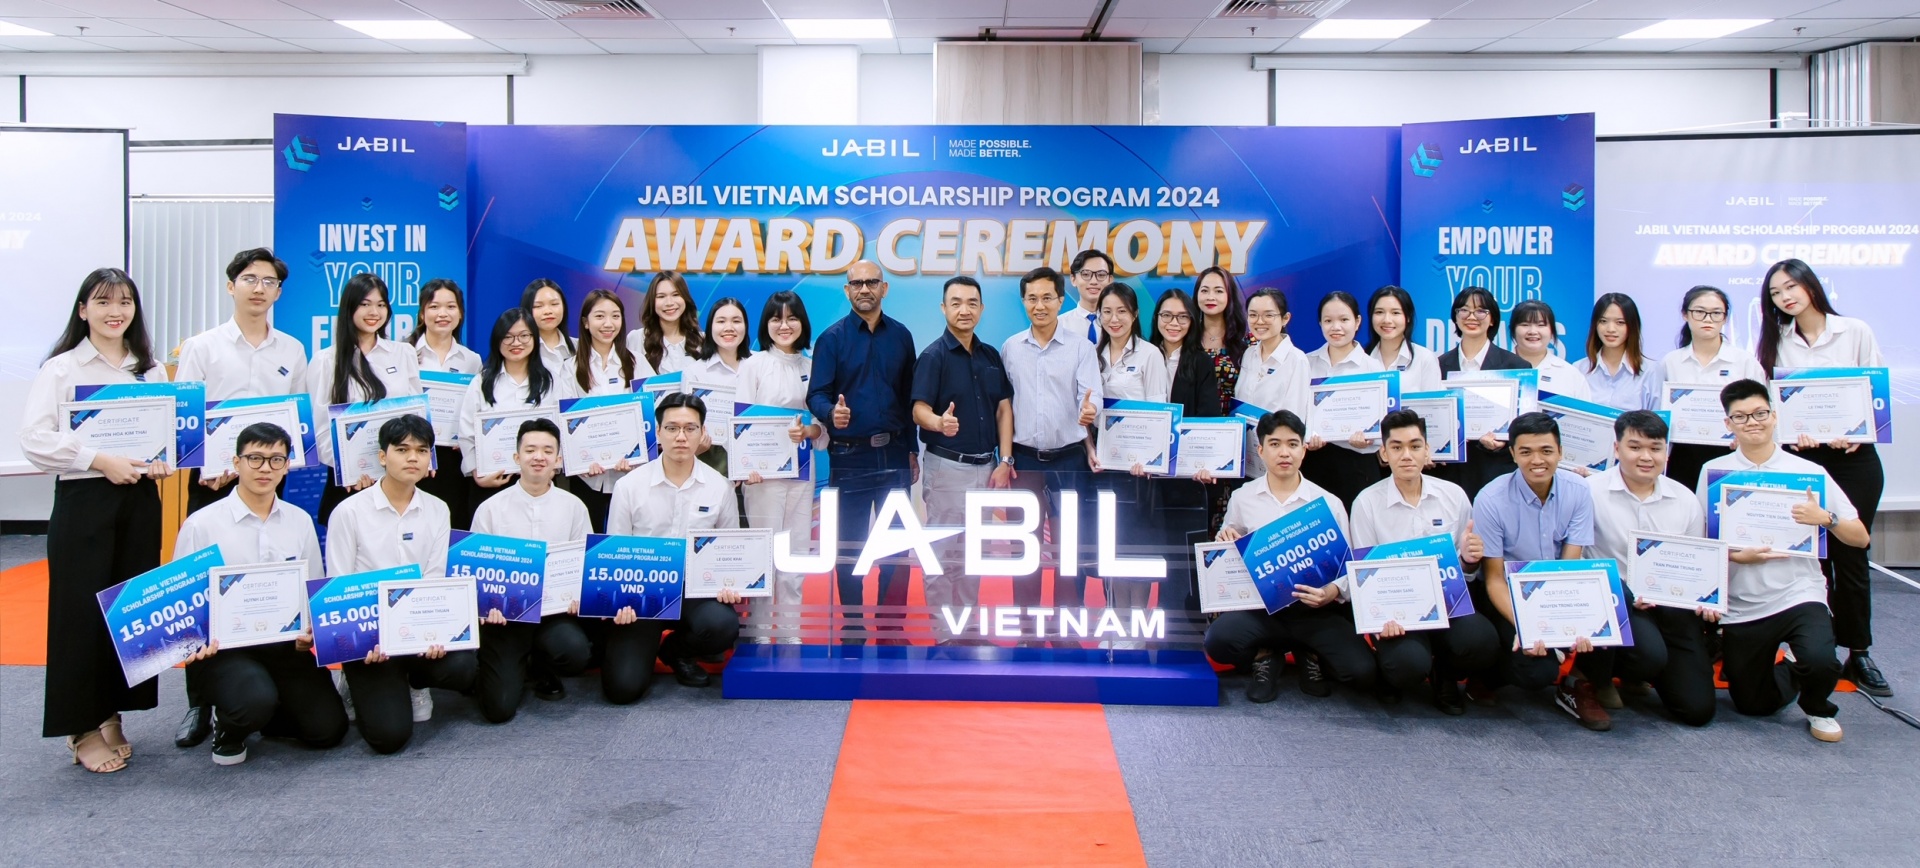 Jabil awards 30 Vietnamese students scholarships